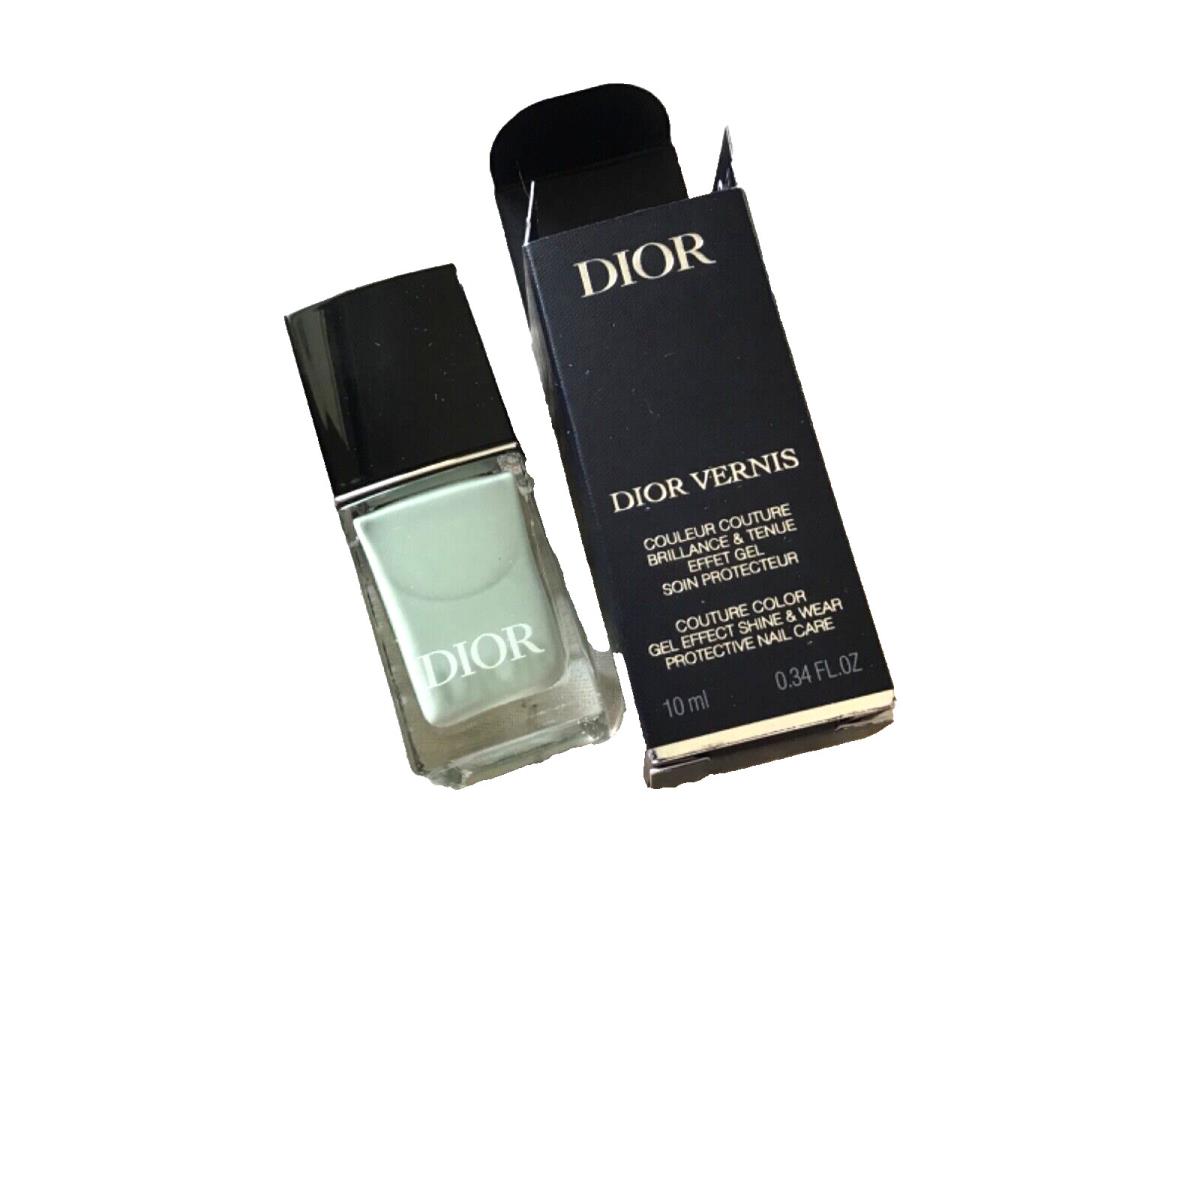 Dior Vernis Summer Limited Nail Polish Pastel Mint 203